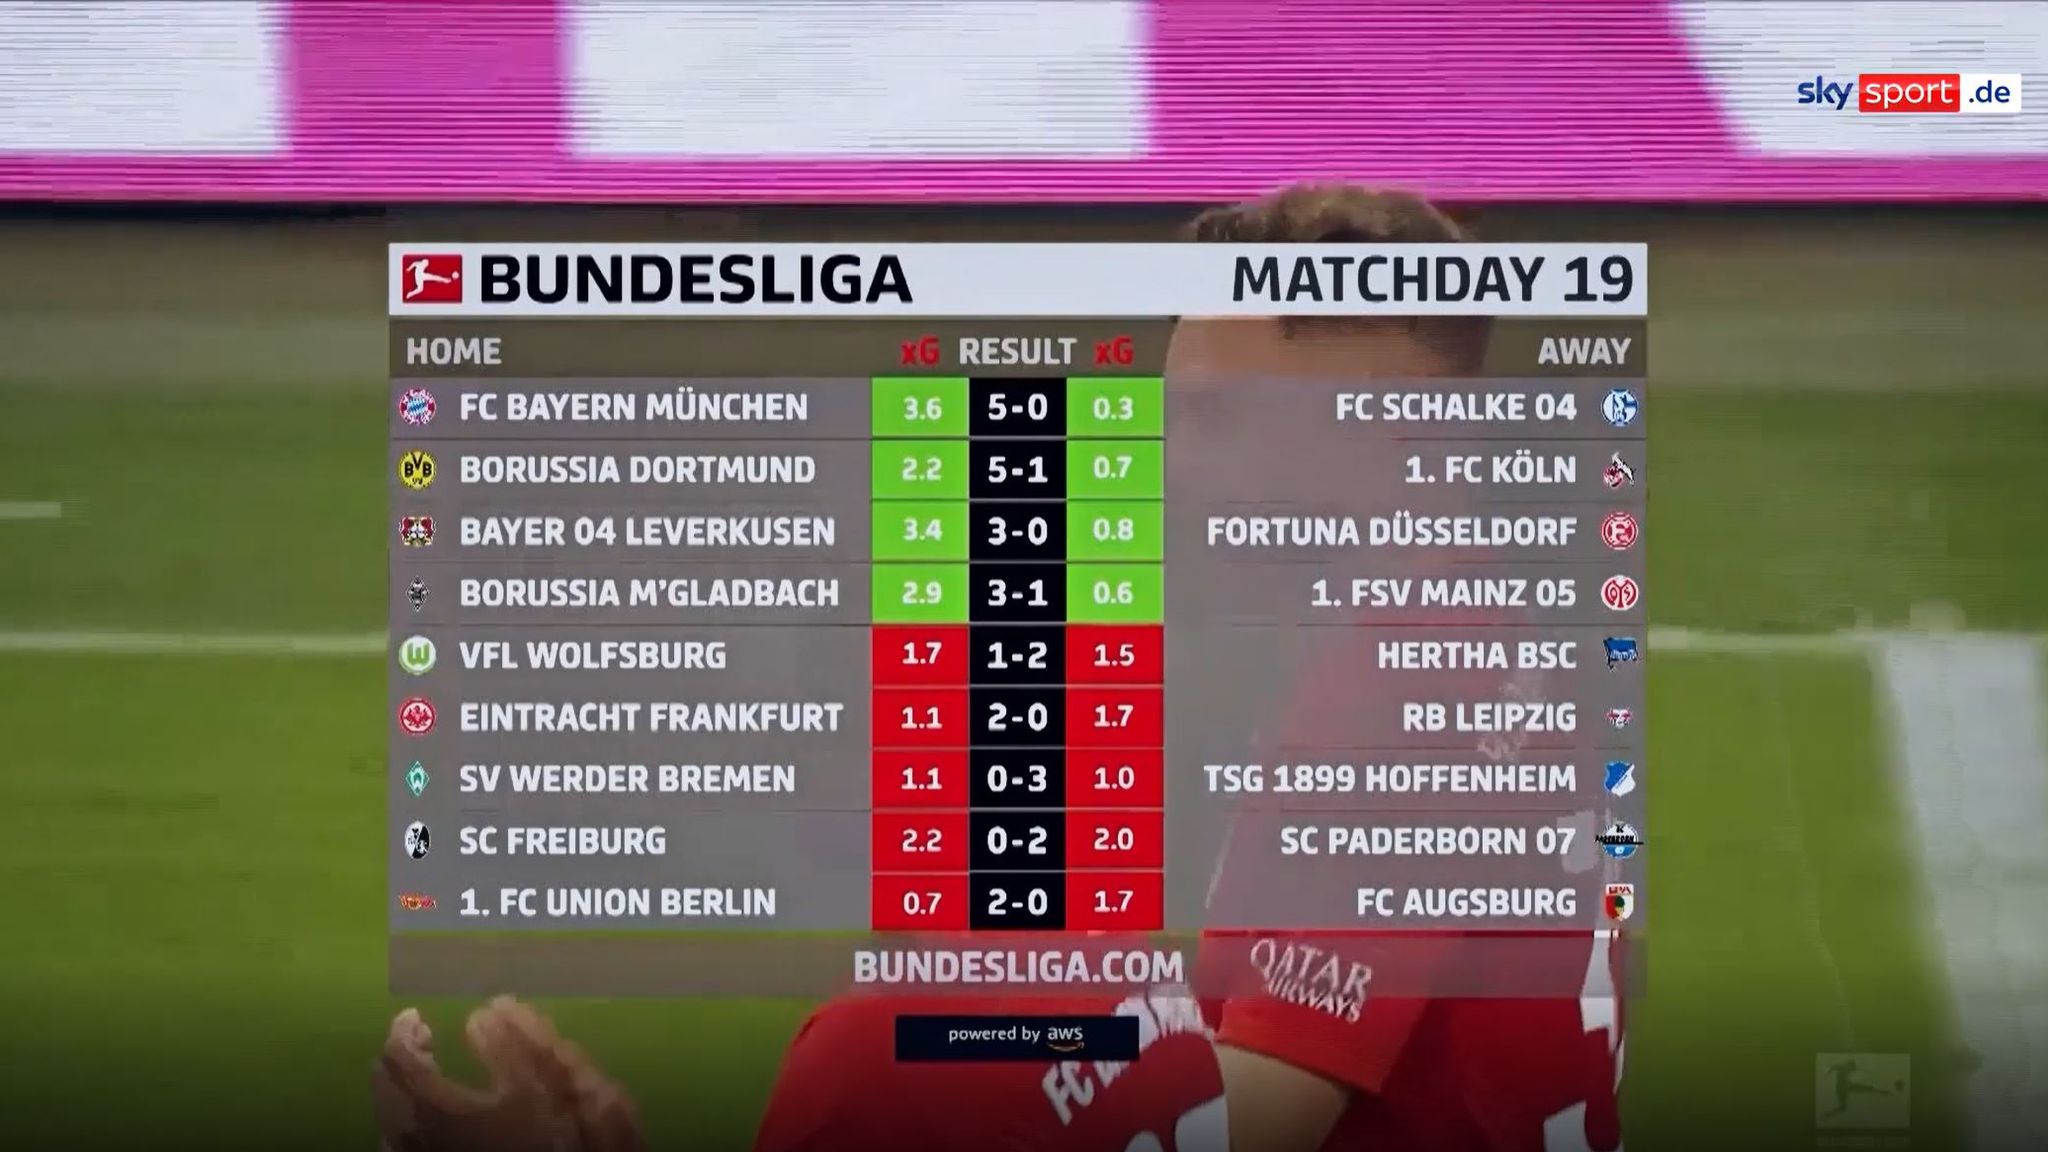 Bildergalerie: Bundesliga Match Facts powered by AWS - Fußball News - Sky Sport